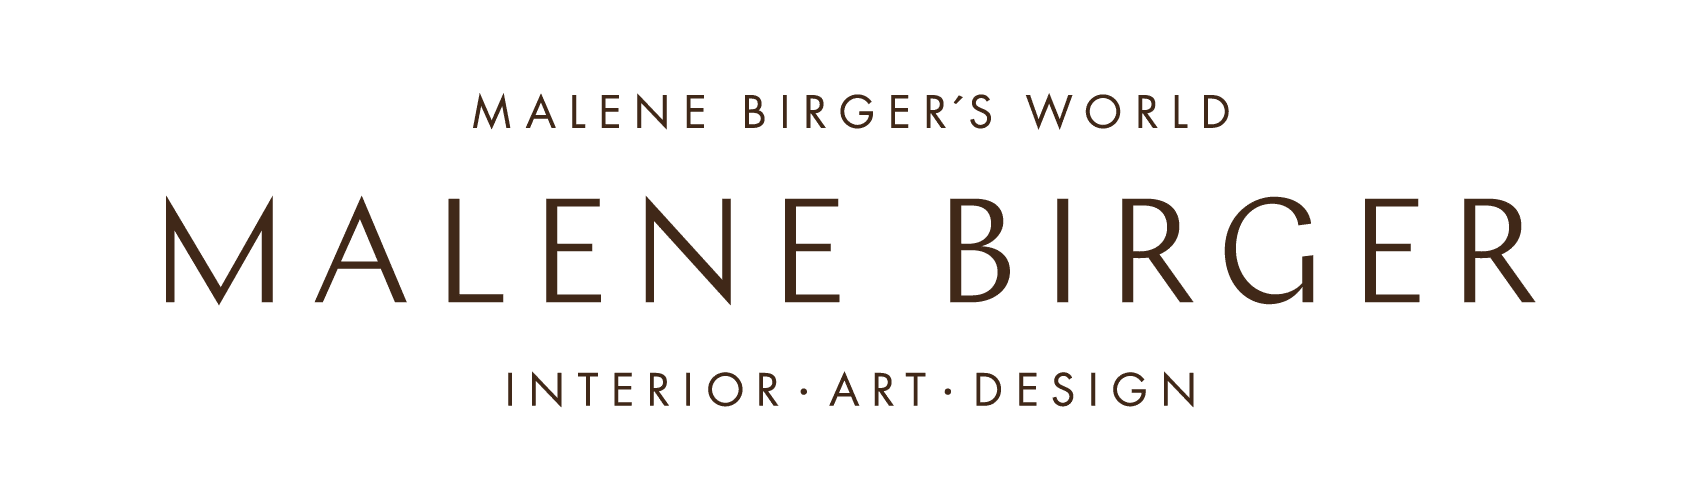 The world of Malene Birger logo